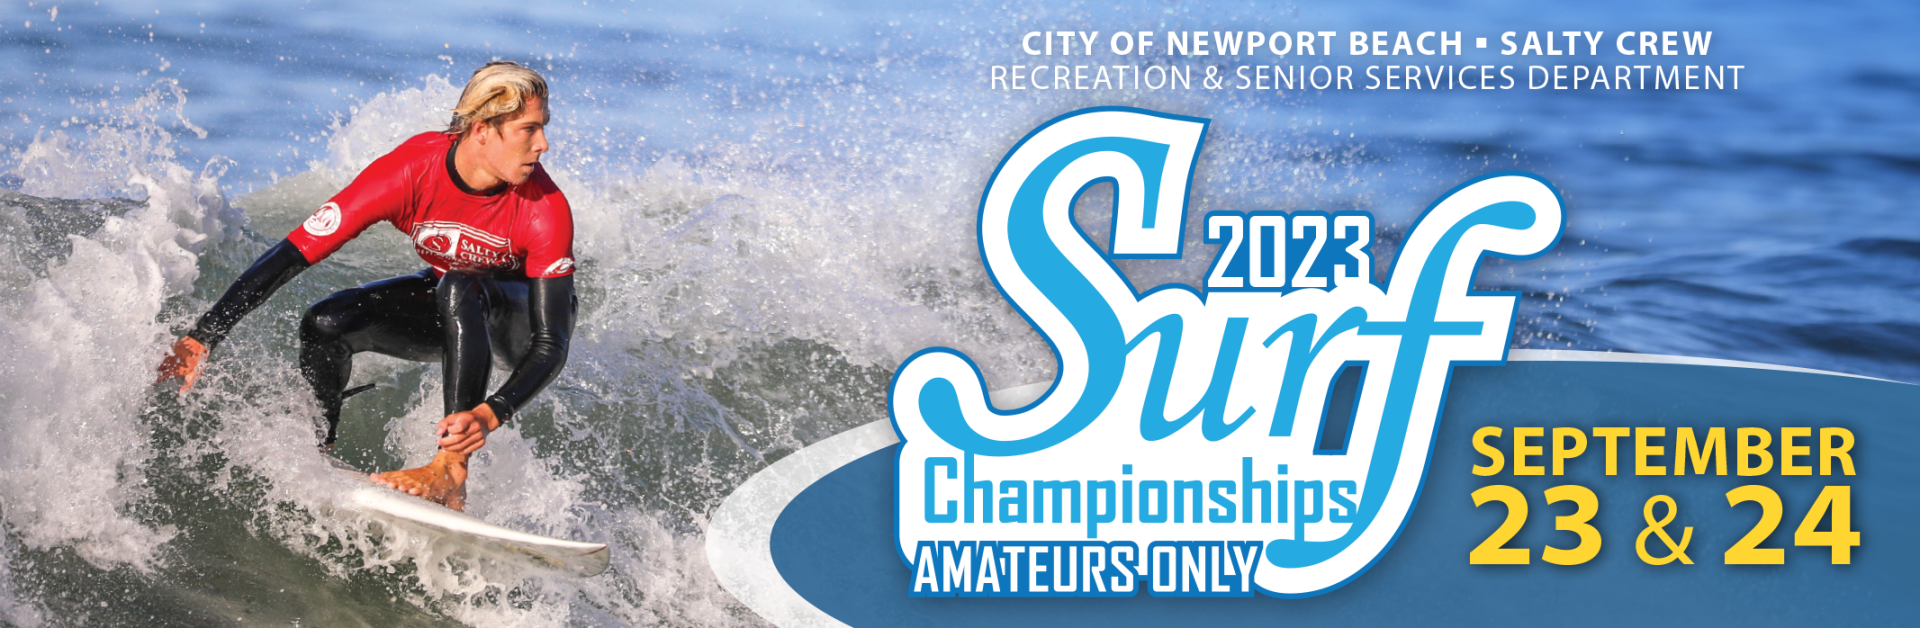 Surf Championships-Calendar-Carousel-2023